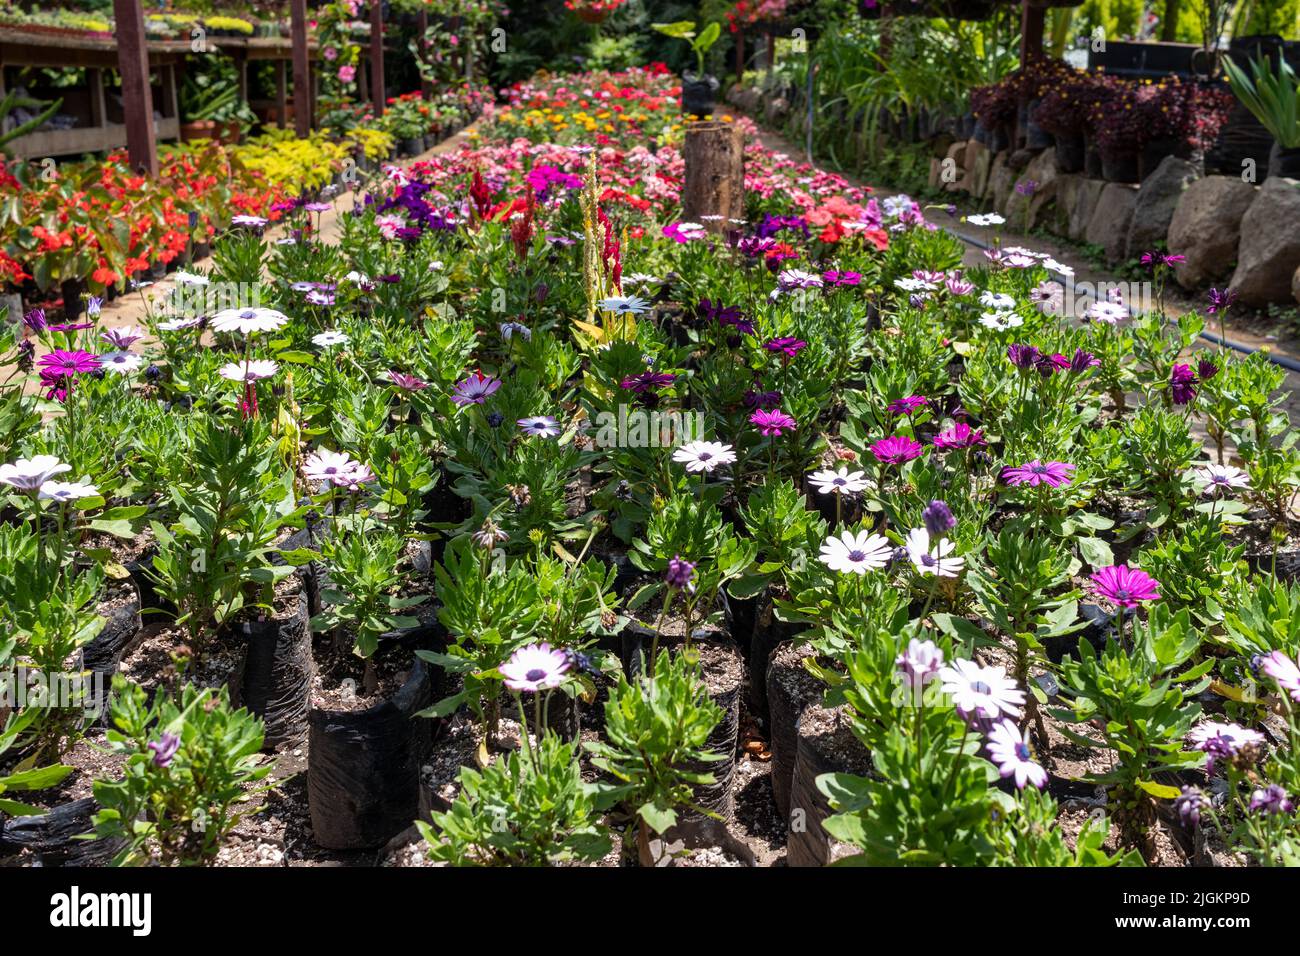 Osteospermum jucundum daisy field on a greenhouse. High quality photo Stock Photo